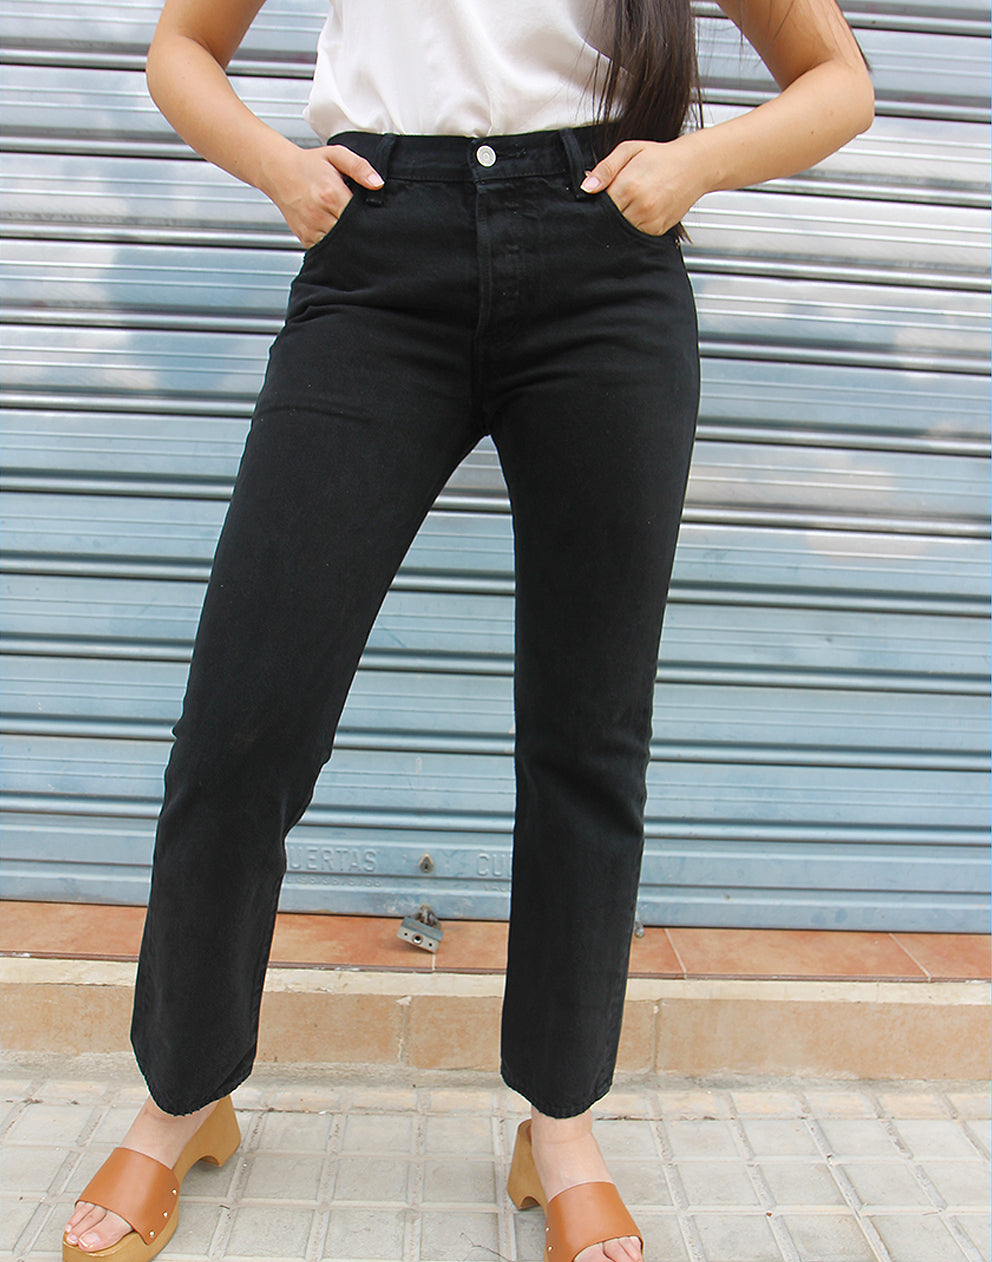 501 Levi's Jeans Black